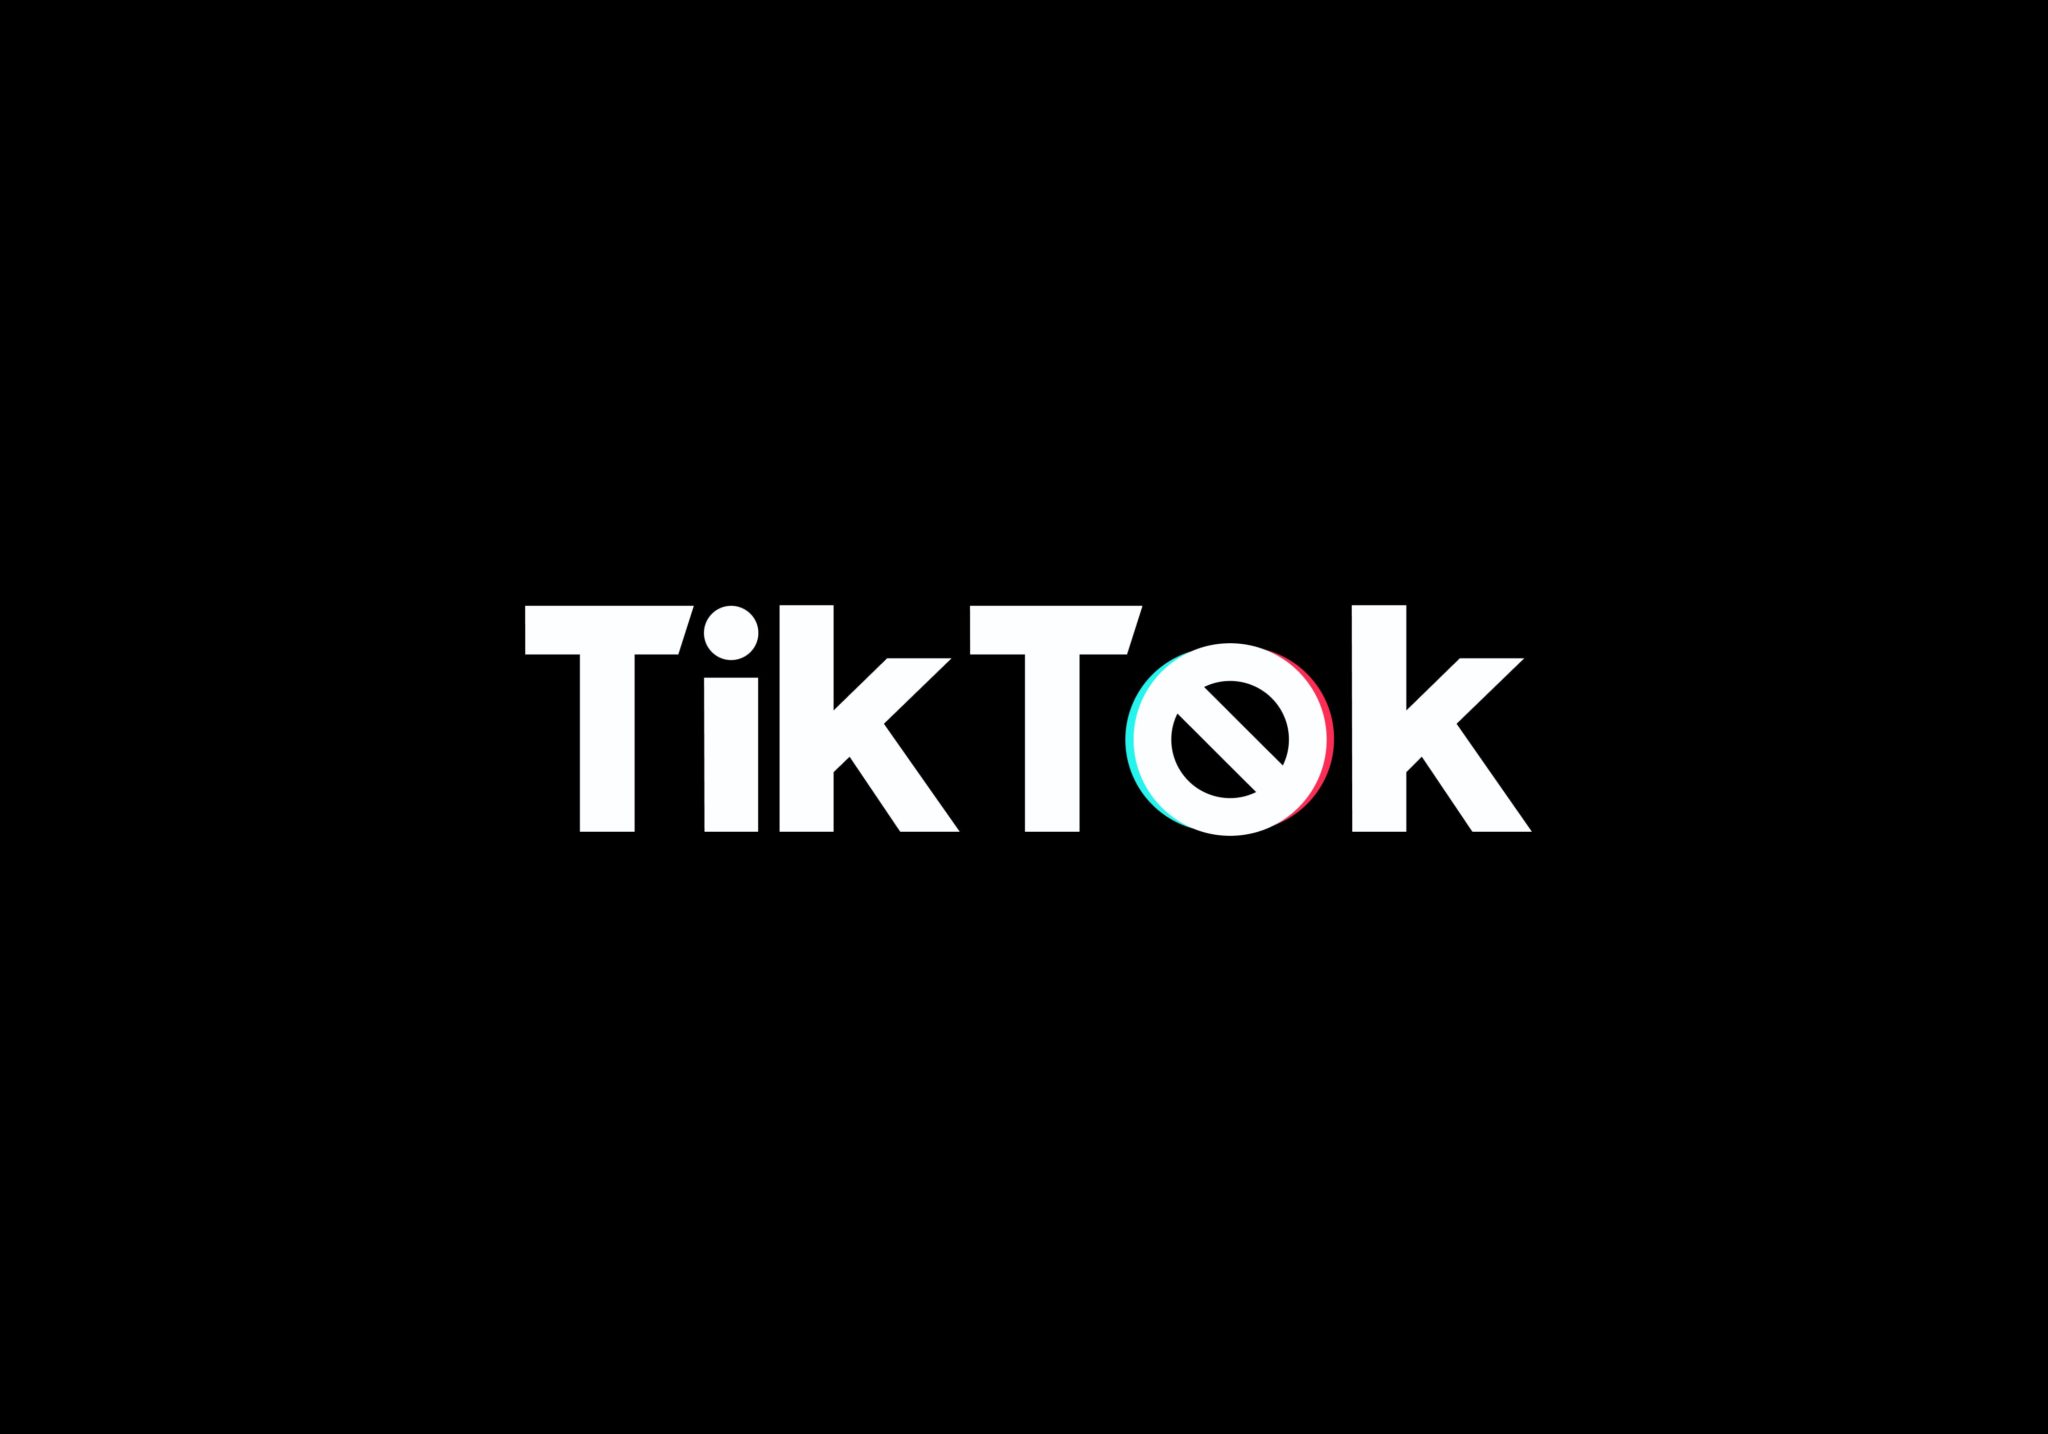 TikTok logo on black background